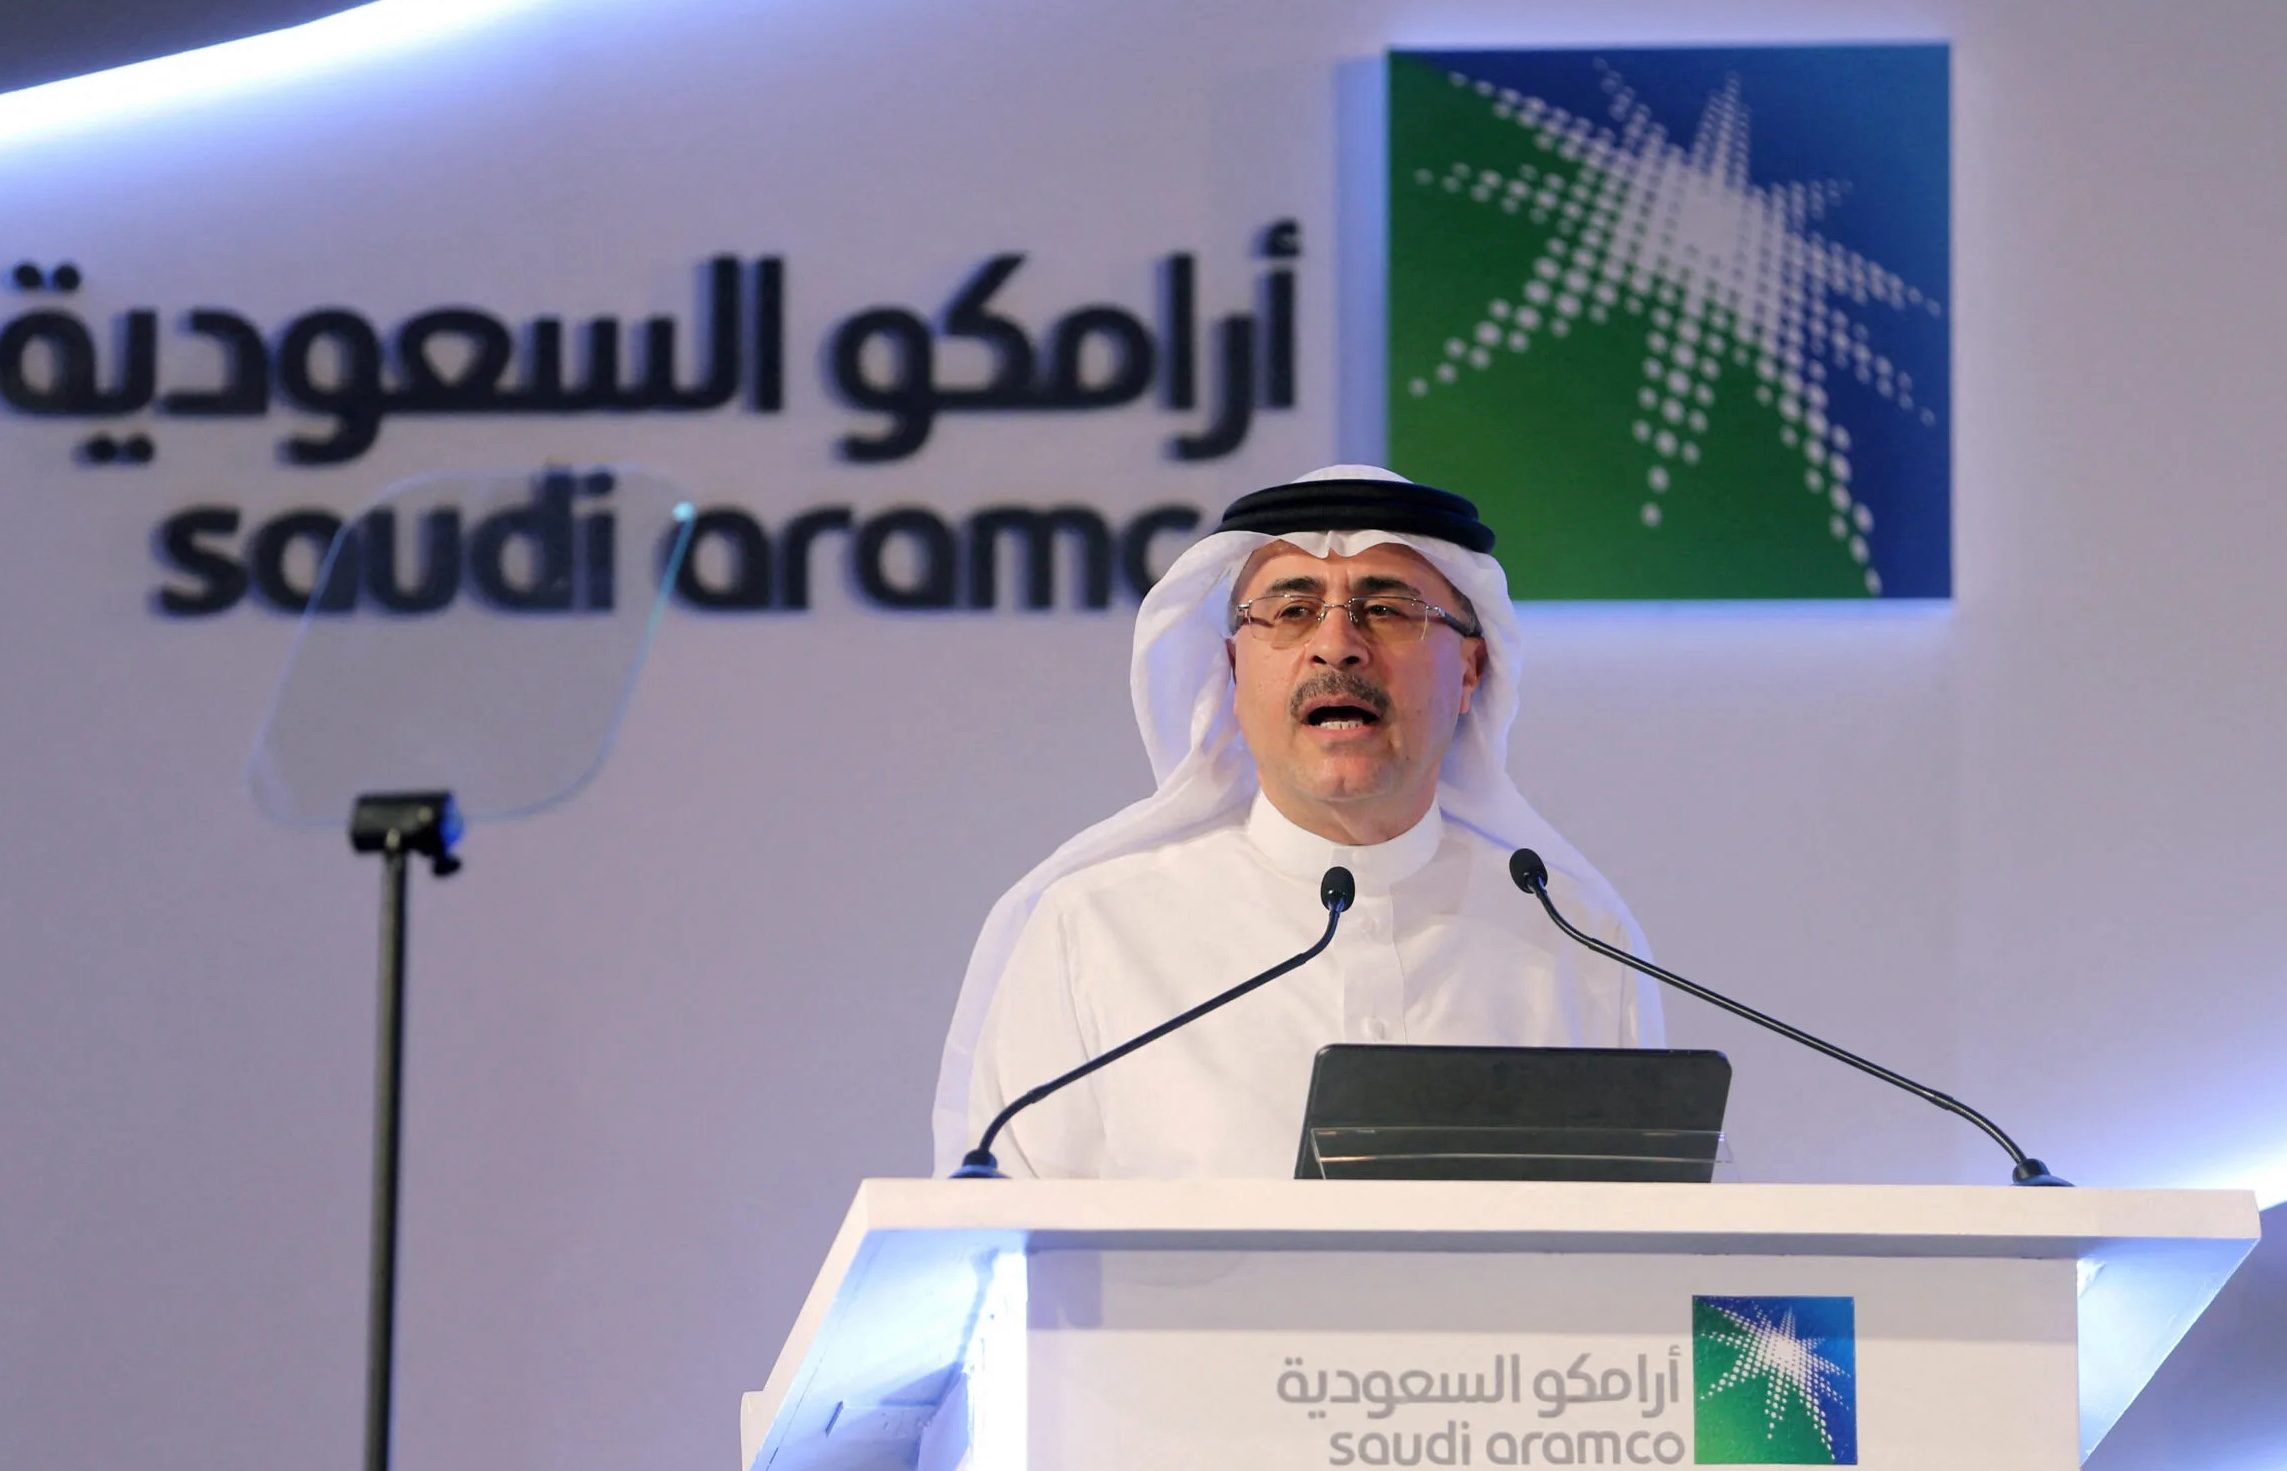 Saudi Aramco CEO Amin Nasser said no LNG would be produced from Saudi Arabia's natural gas output